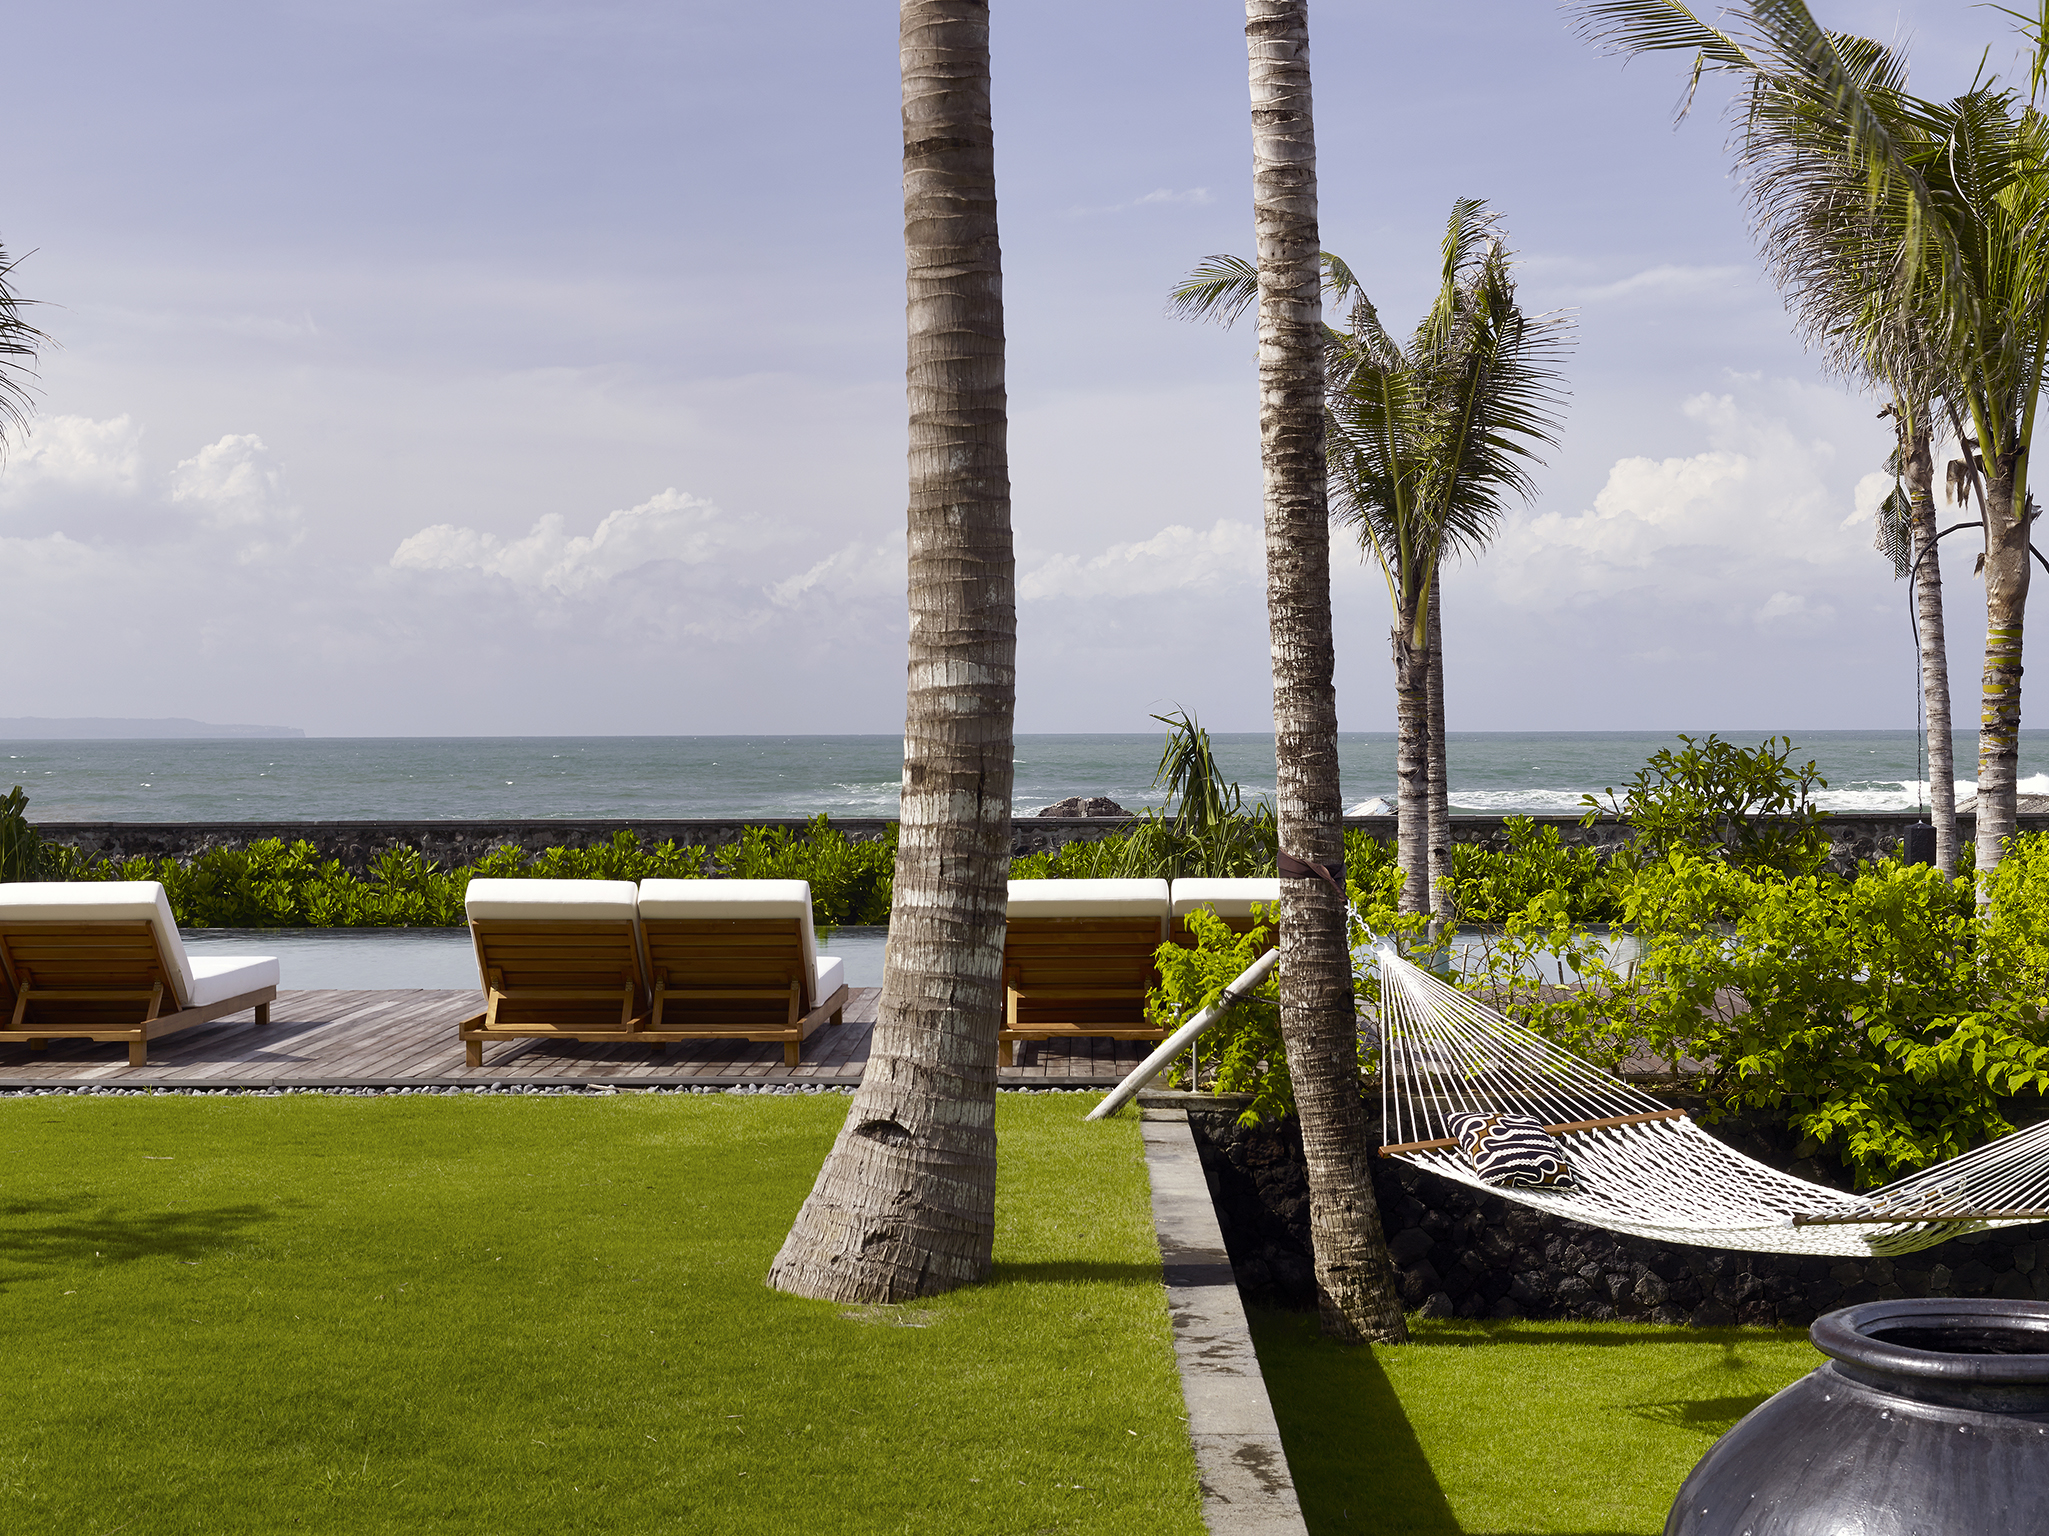 Arnalaya Beach House - Garden pool and sea - Arnalaya Beach House, Canggu, Bali